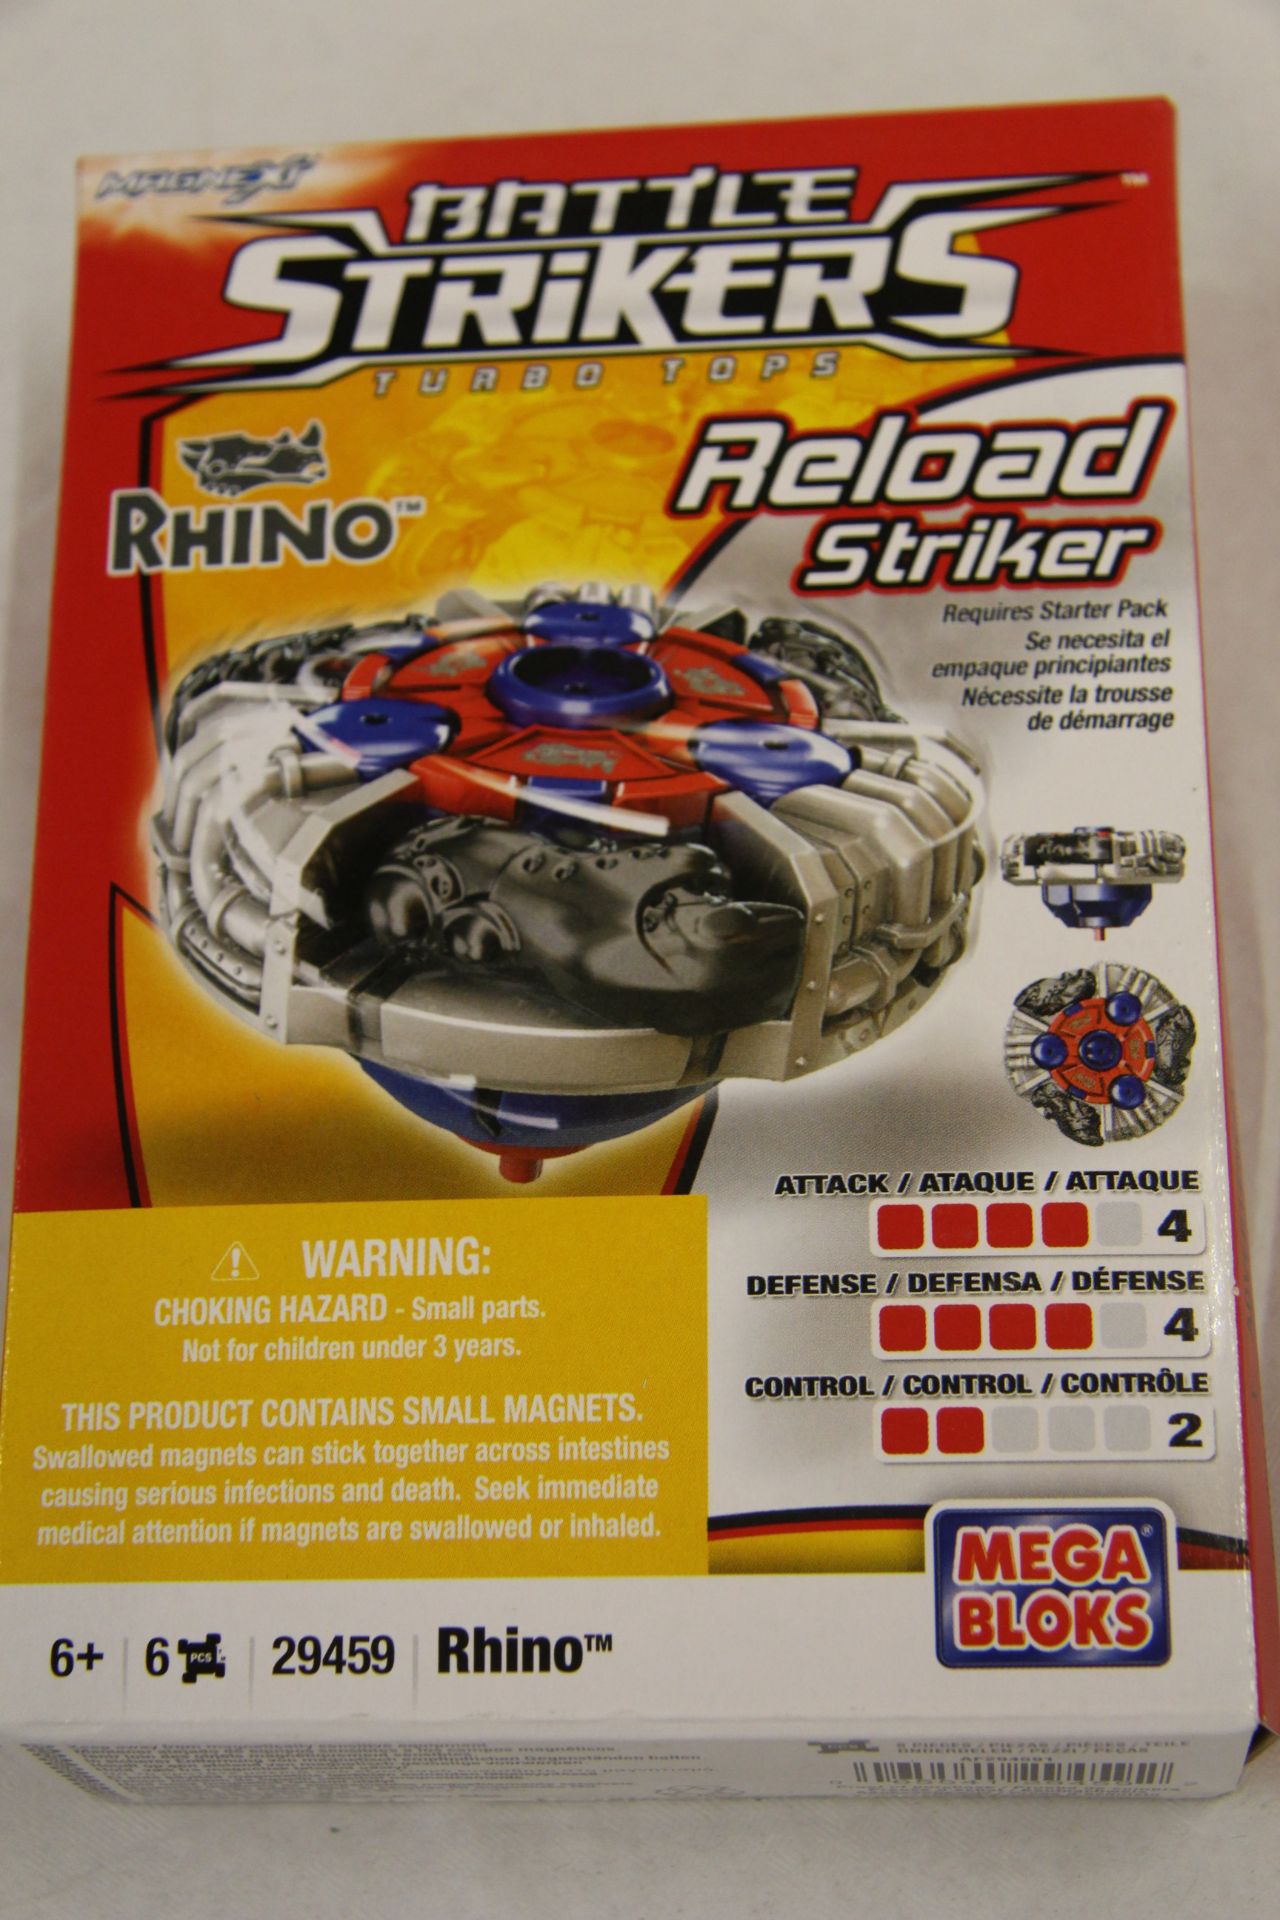 V Battle Strikers Rhino Reload Striker